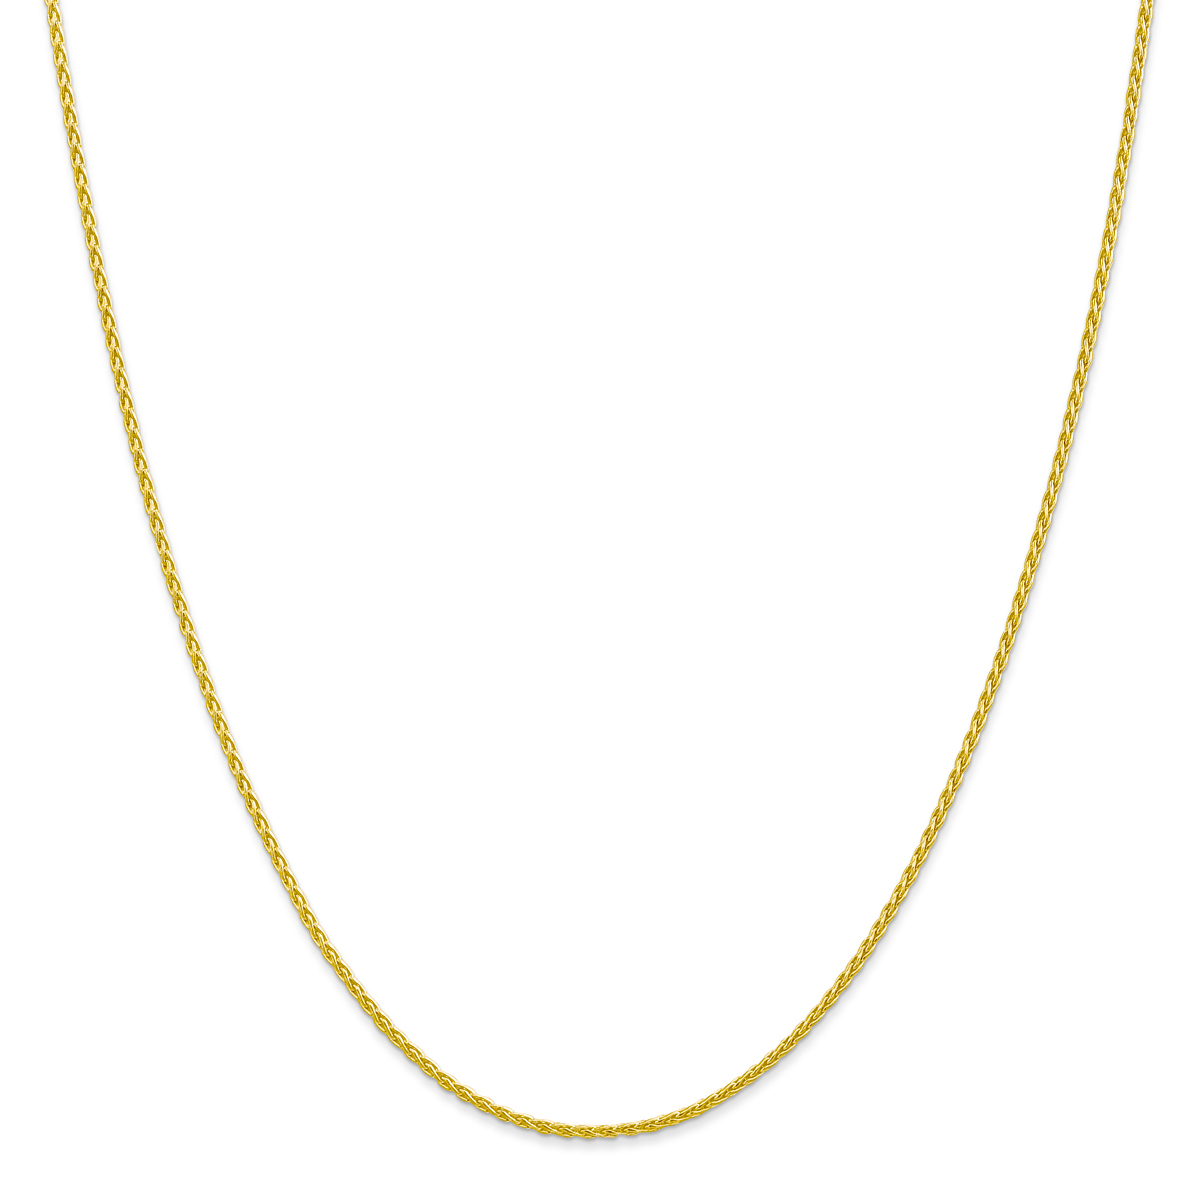 Adult Unisex Gold Classics(tm) 10kt. Parisian 30in. Chain Necklace